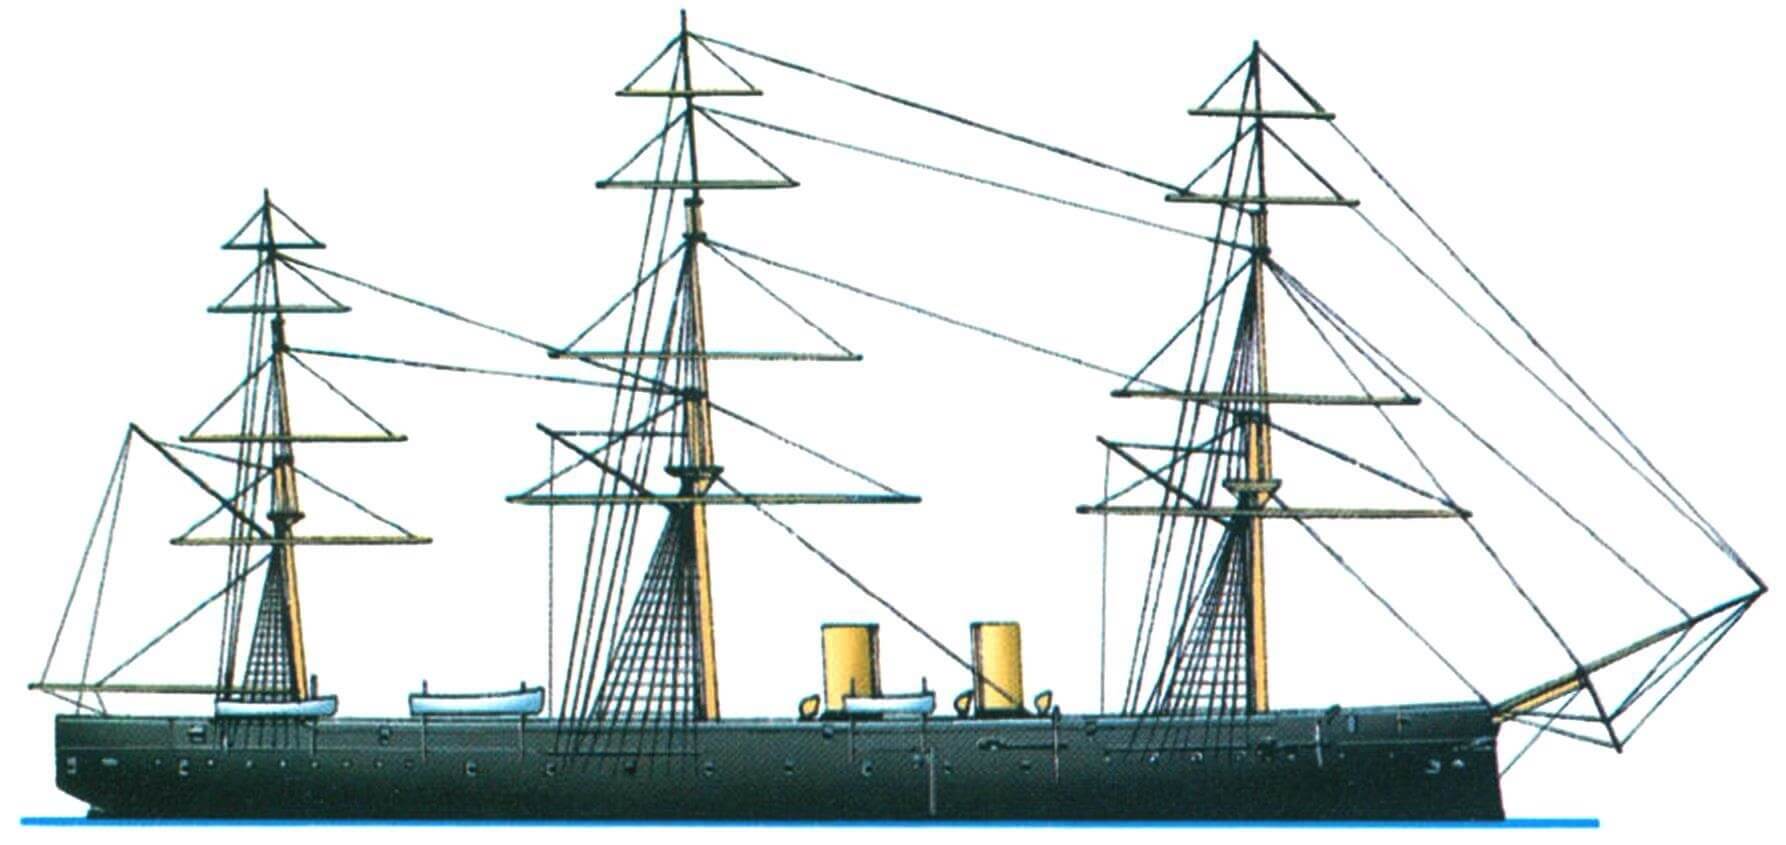 Винтовой фрегат «Шах», Англия, 1876 г.